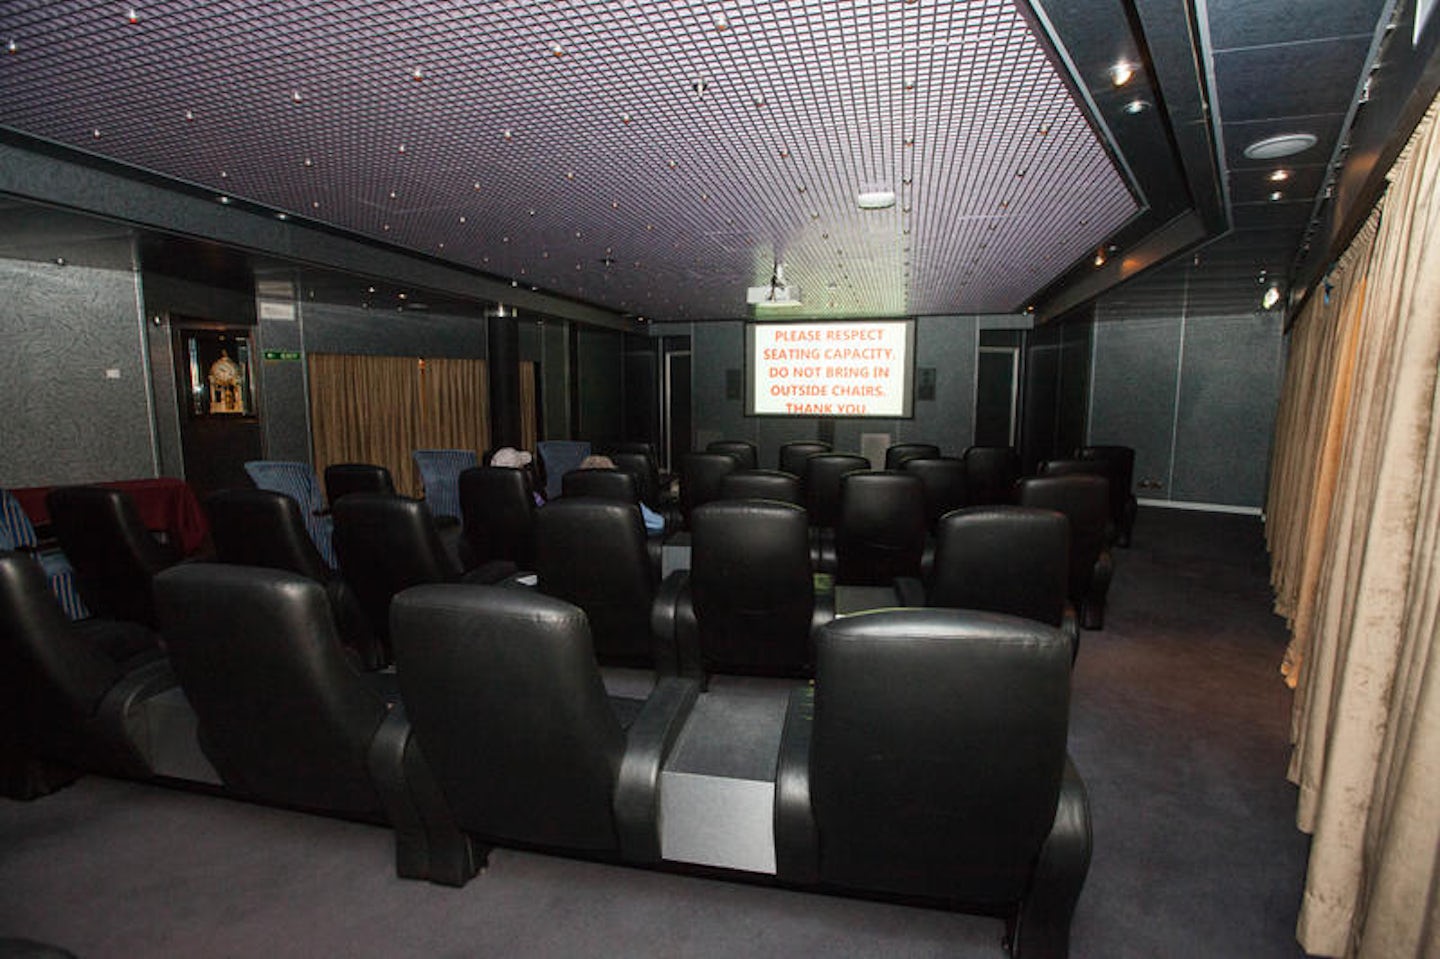 Screening Room on Eurodam